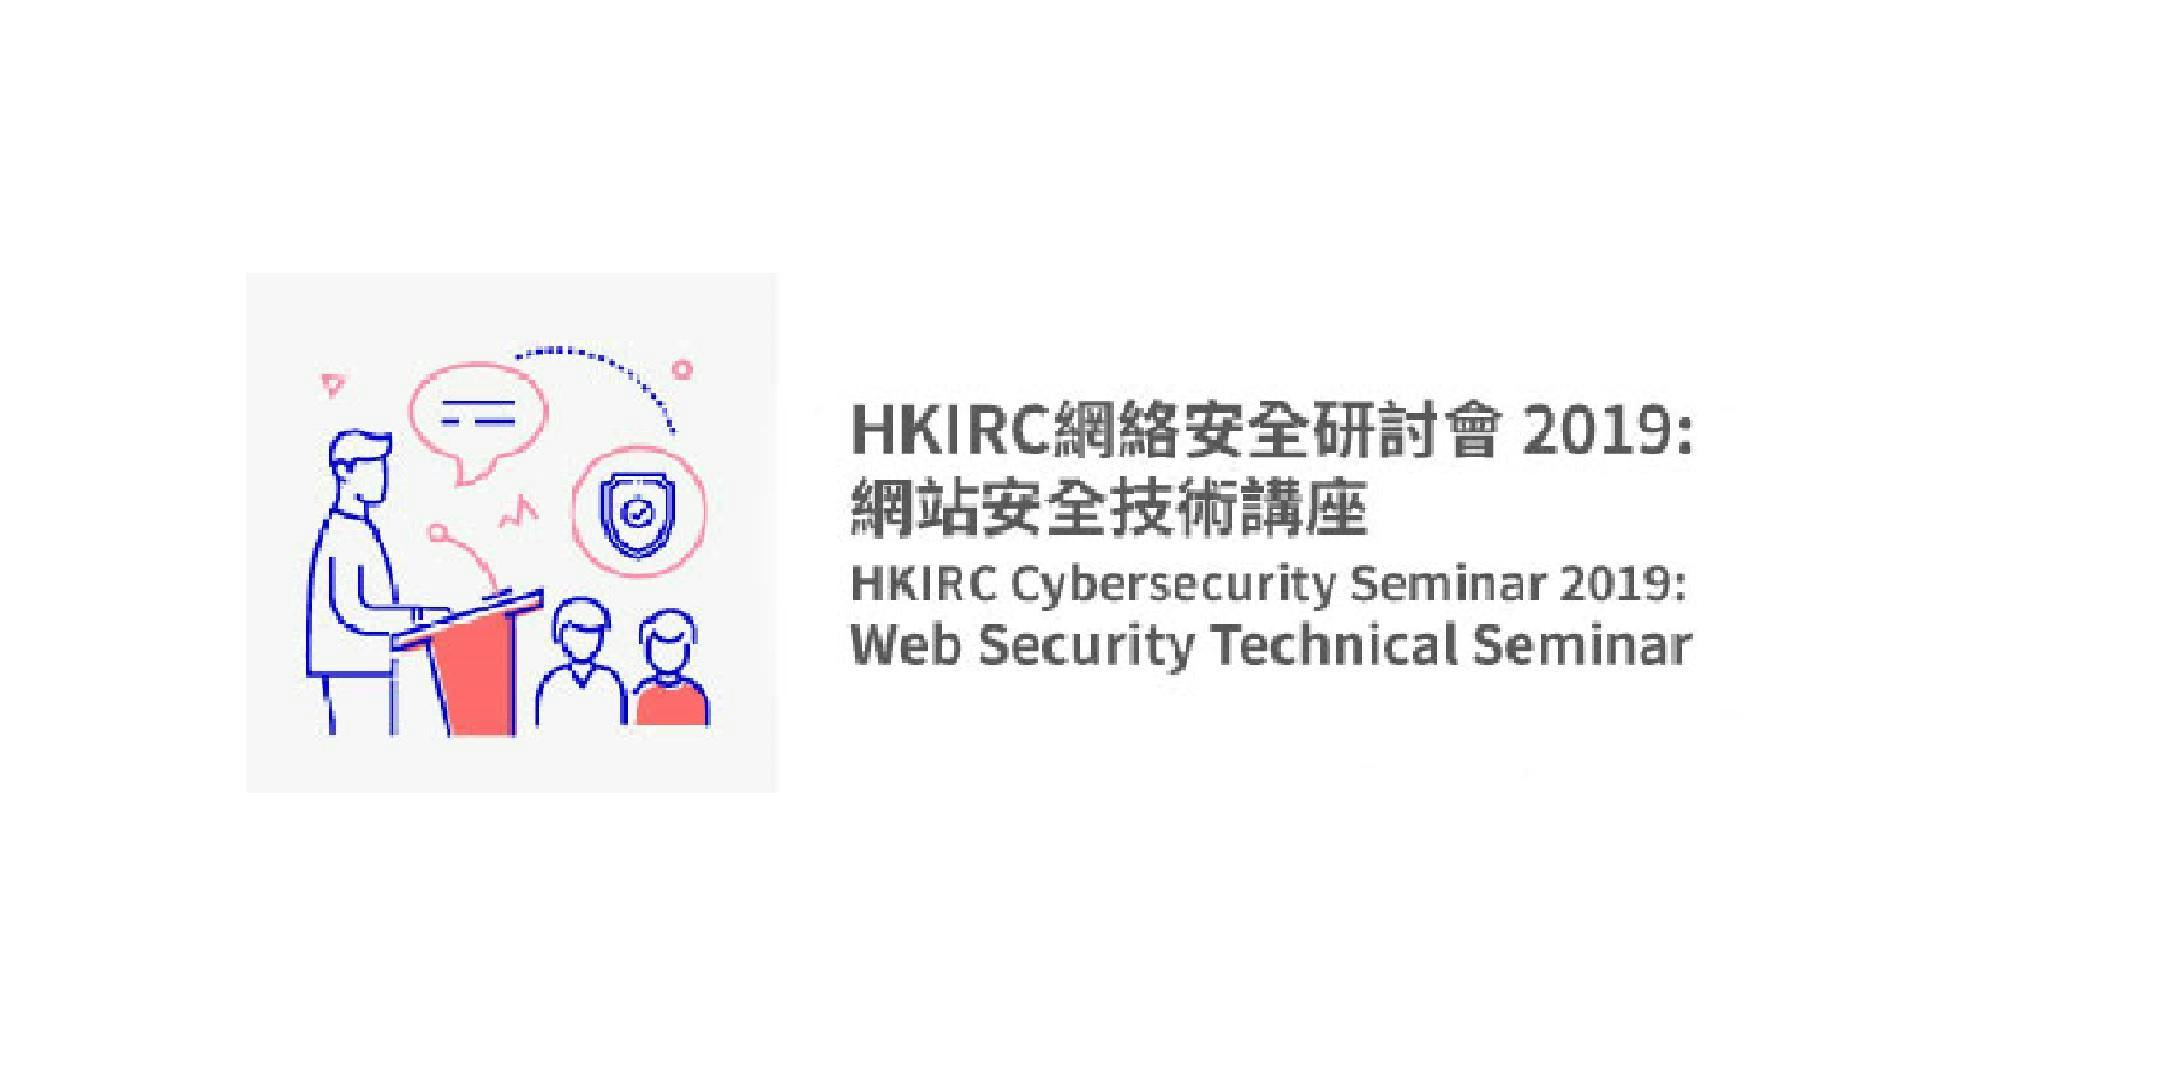 HKIRC Cybersecurity Seminar 2019: Web Security Technical Seminar on 20 Sep